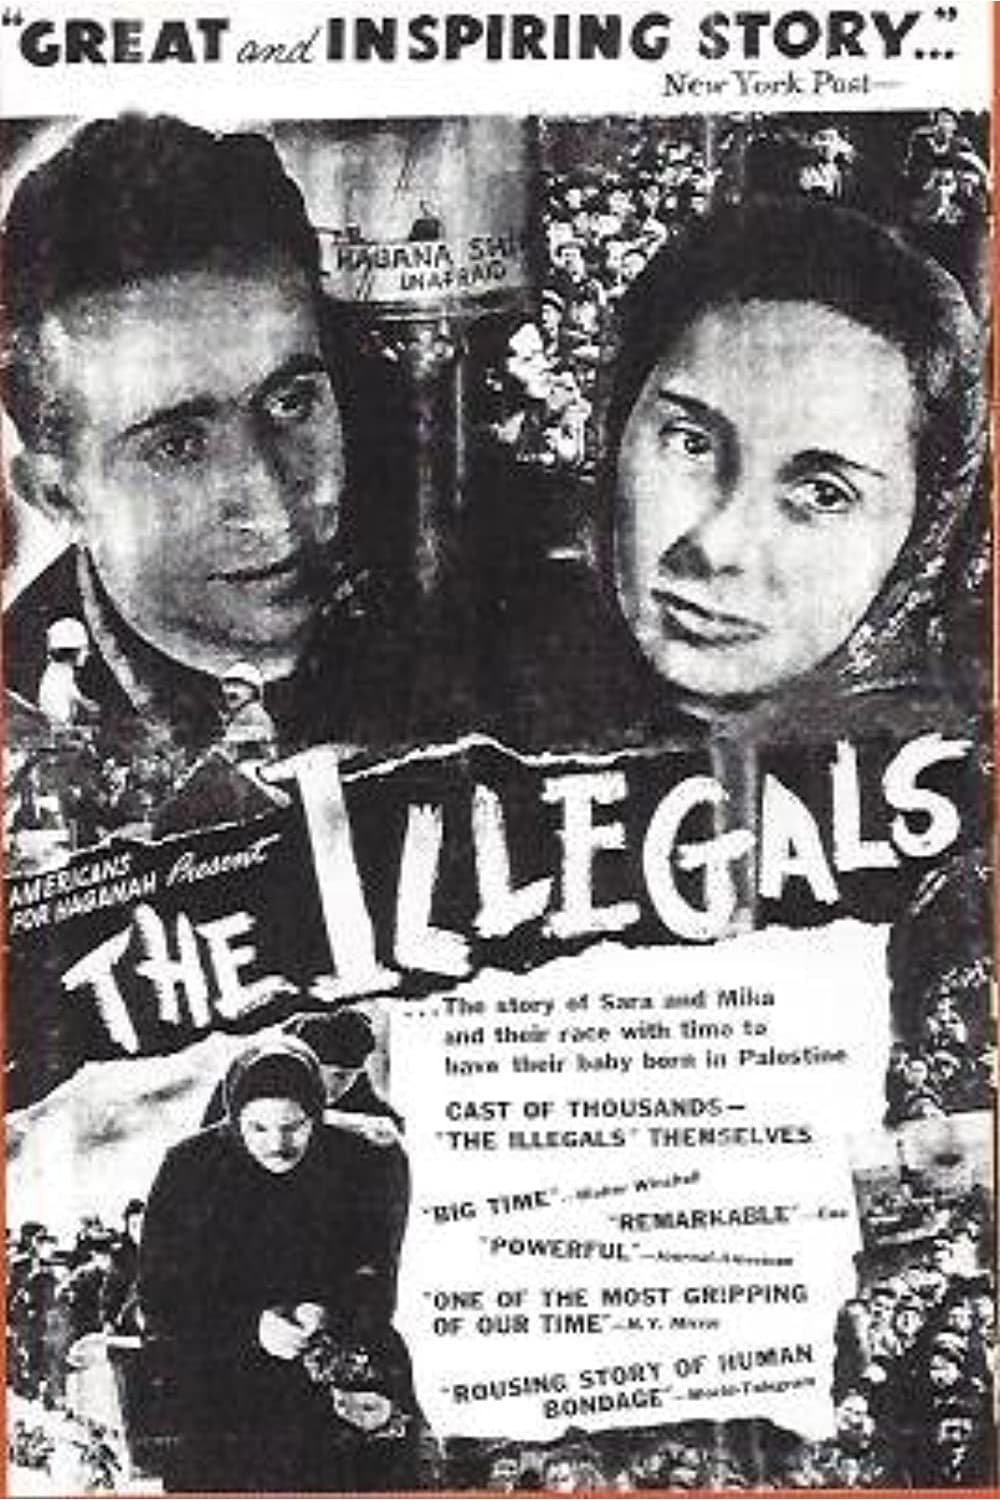 The Illegals